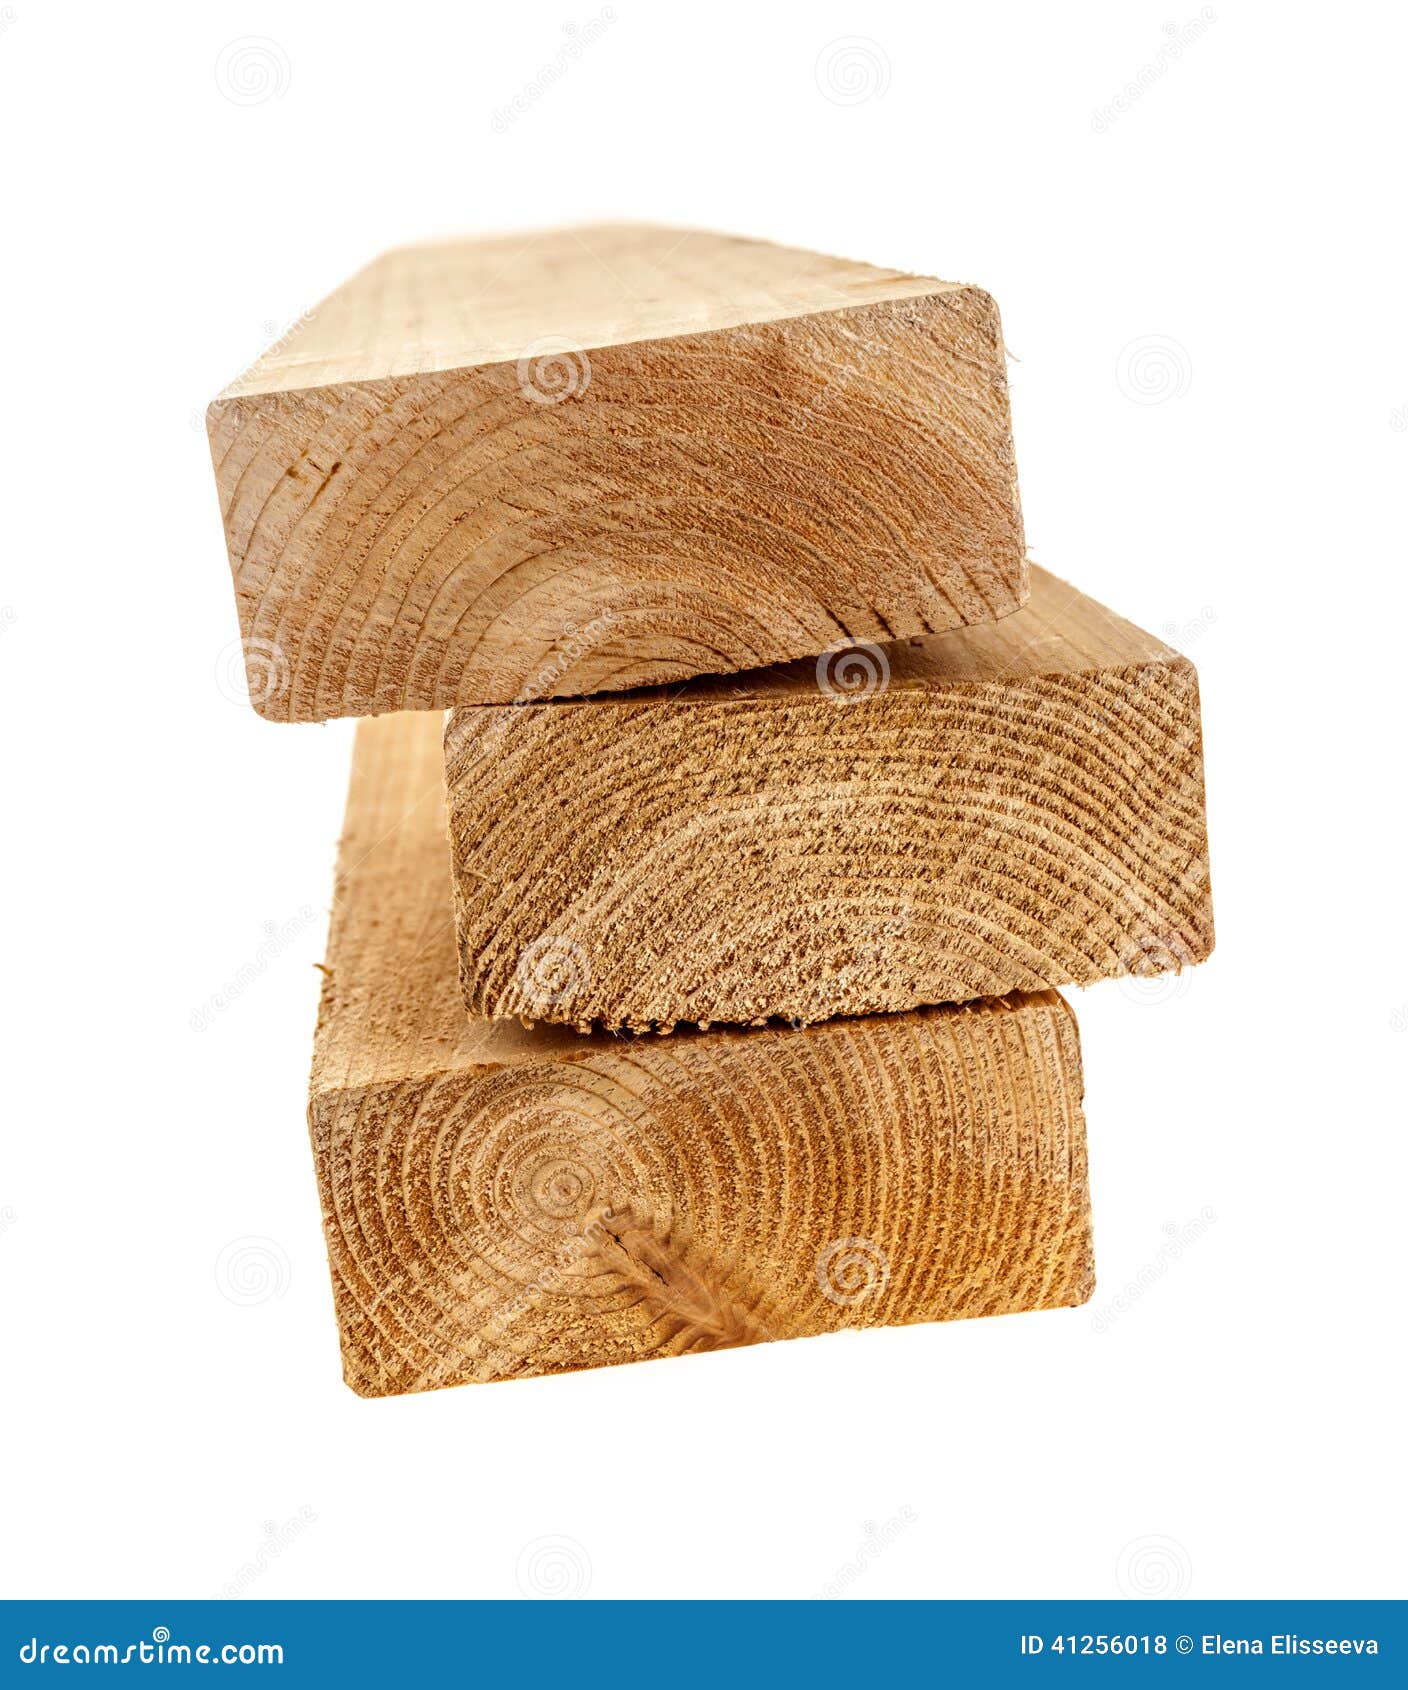 2X4 cedar lumber prices